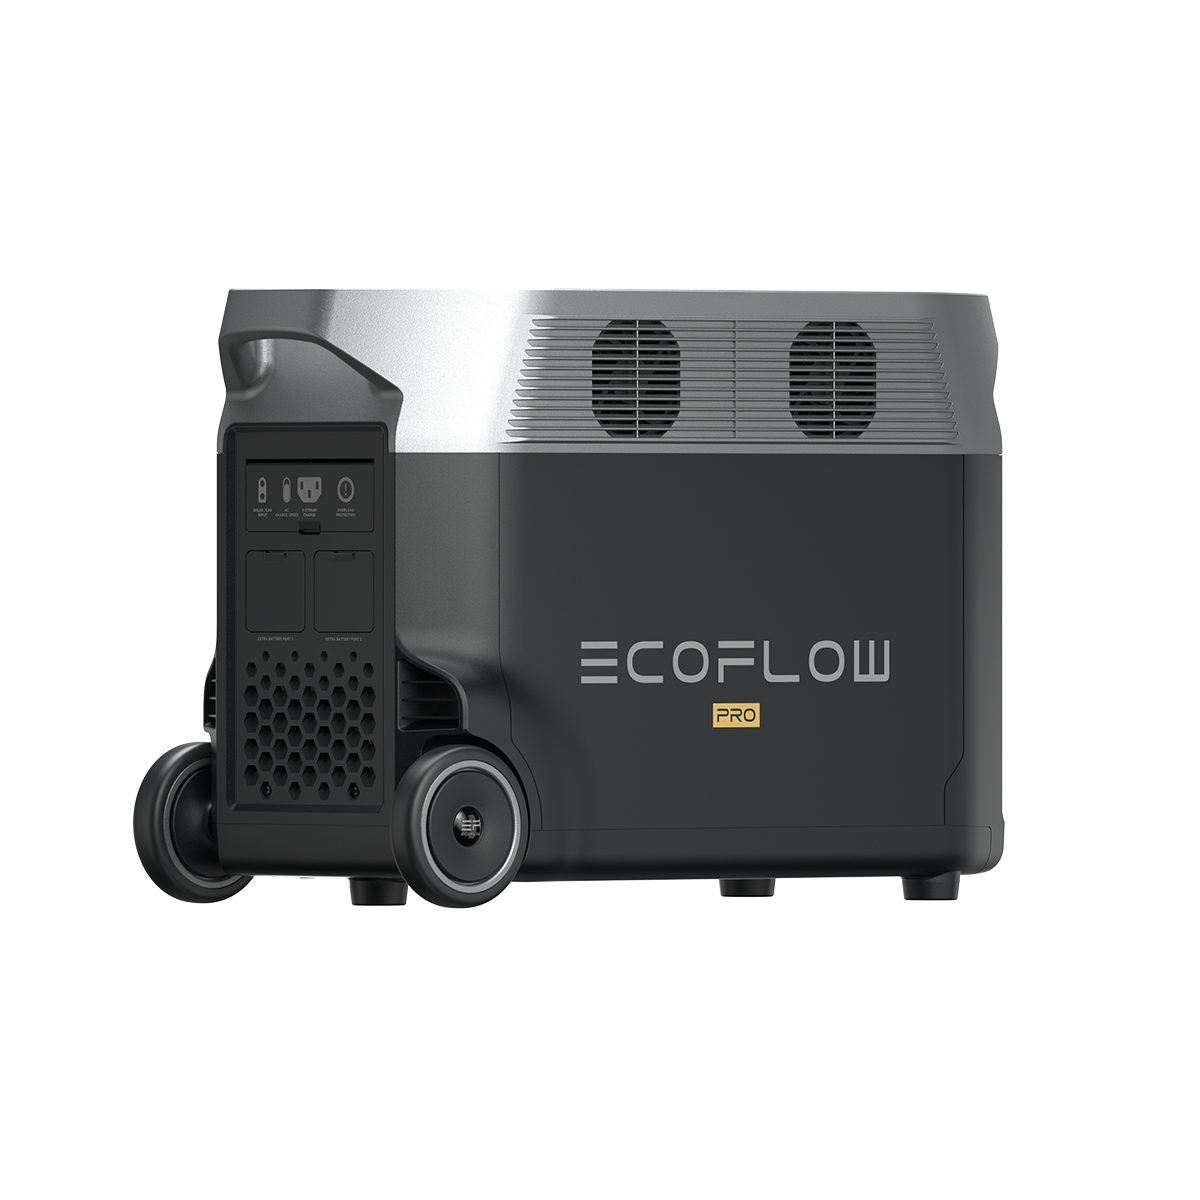 EcoFlow Delta Pro